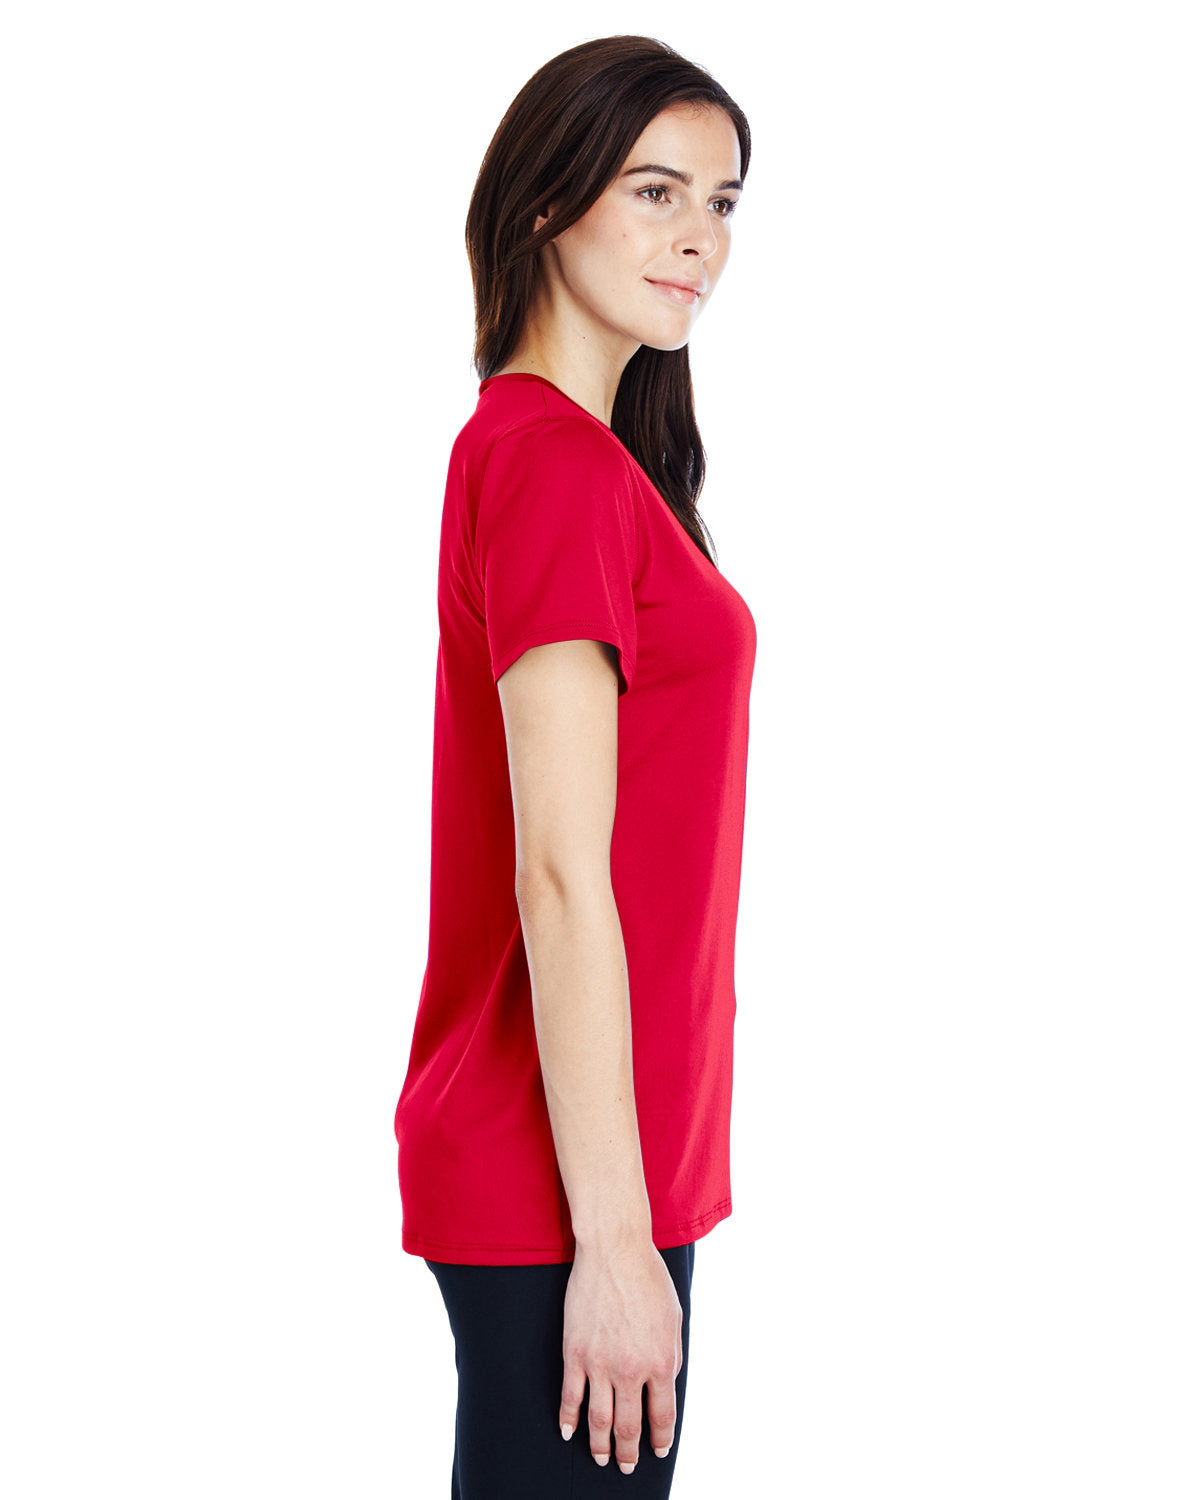 Branded Under Armour Ladies Locker T-Shirt 2.0 Red/M Silver